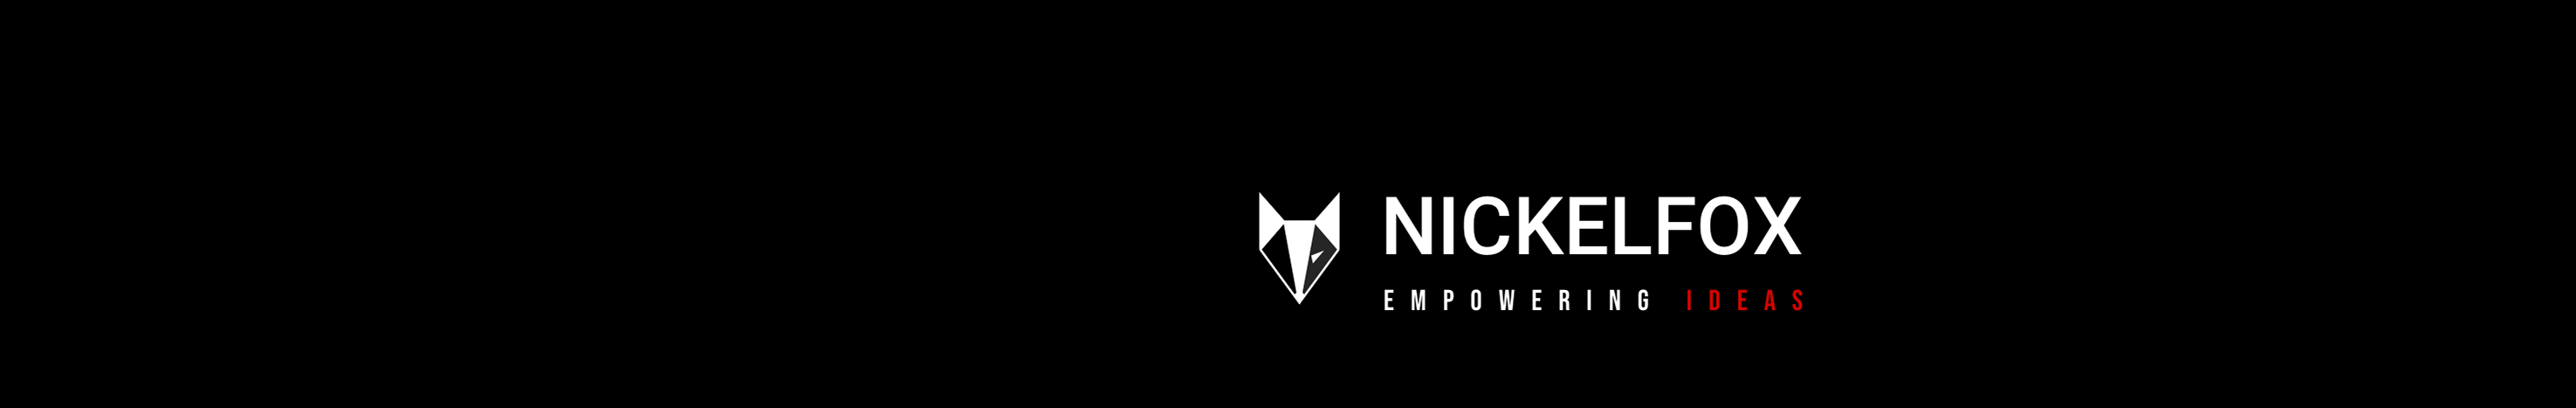 Nickelfox ✪'s profile banner